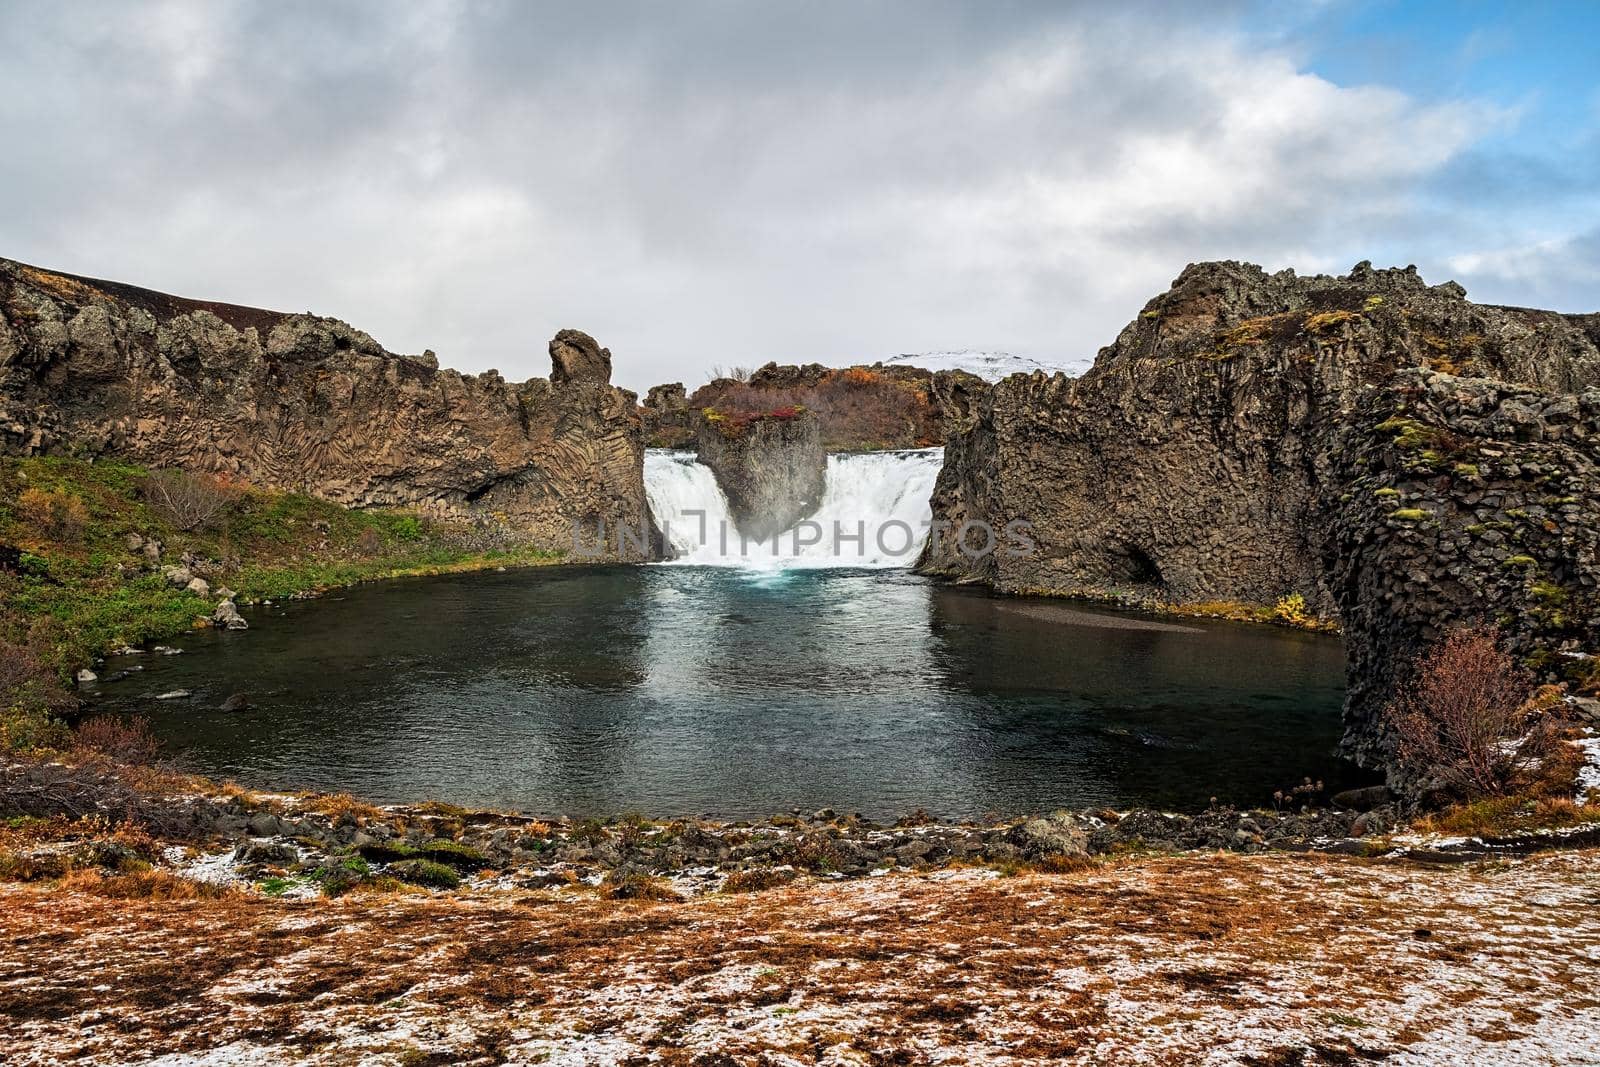 Hjalparfoss waterfall in South Iceland by LuigiMorbidelli